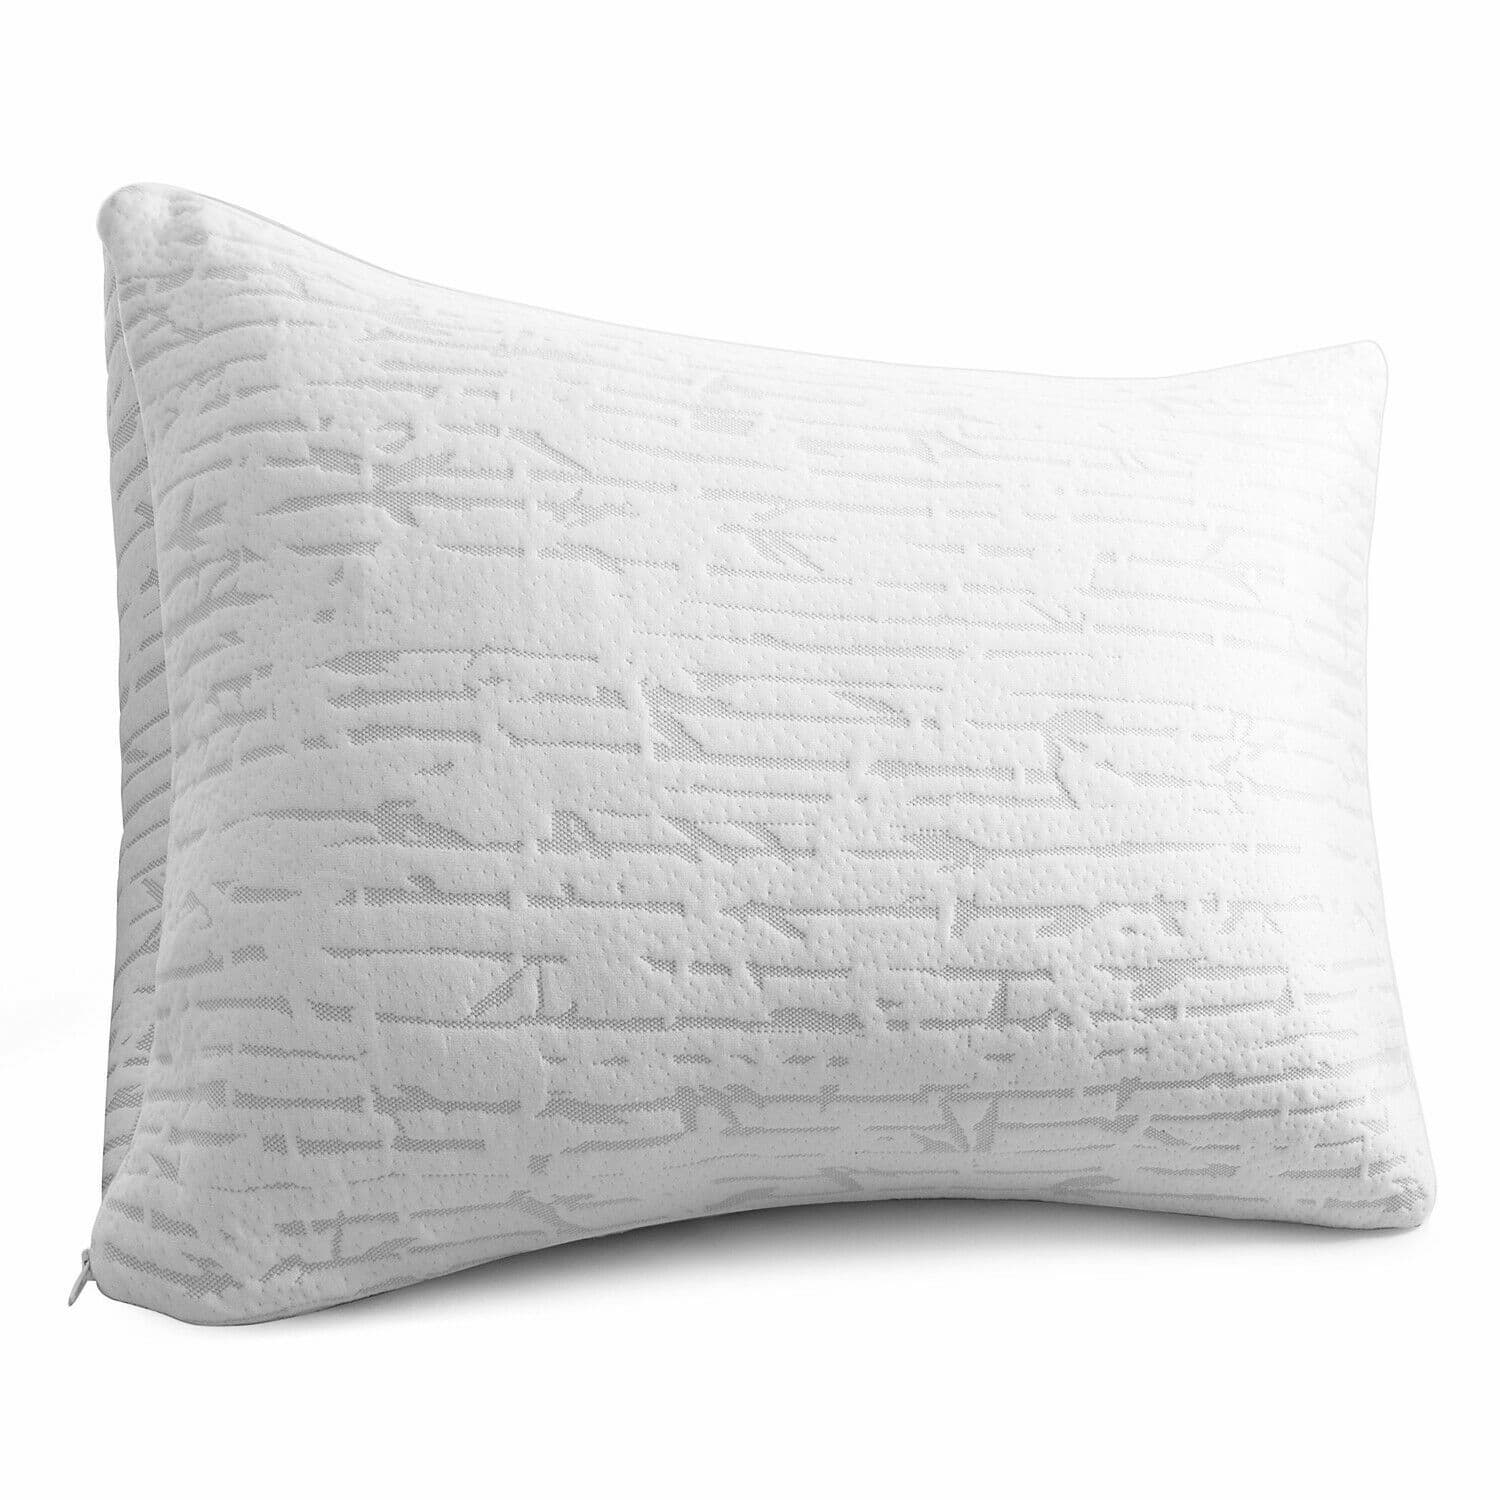 A white pillow on a white background.